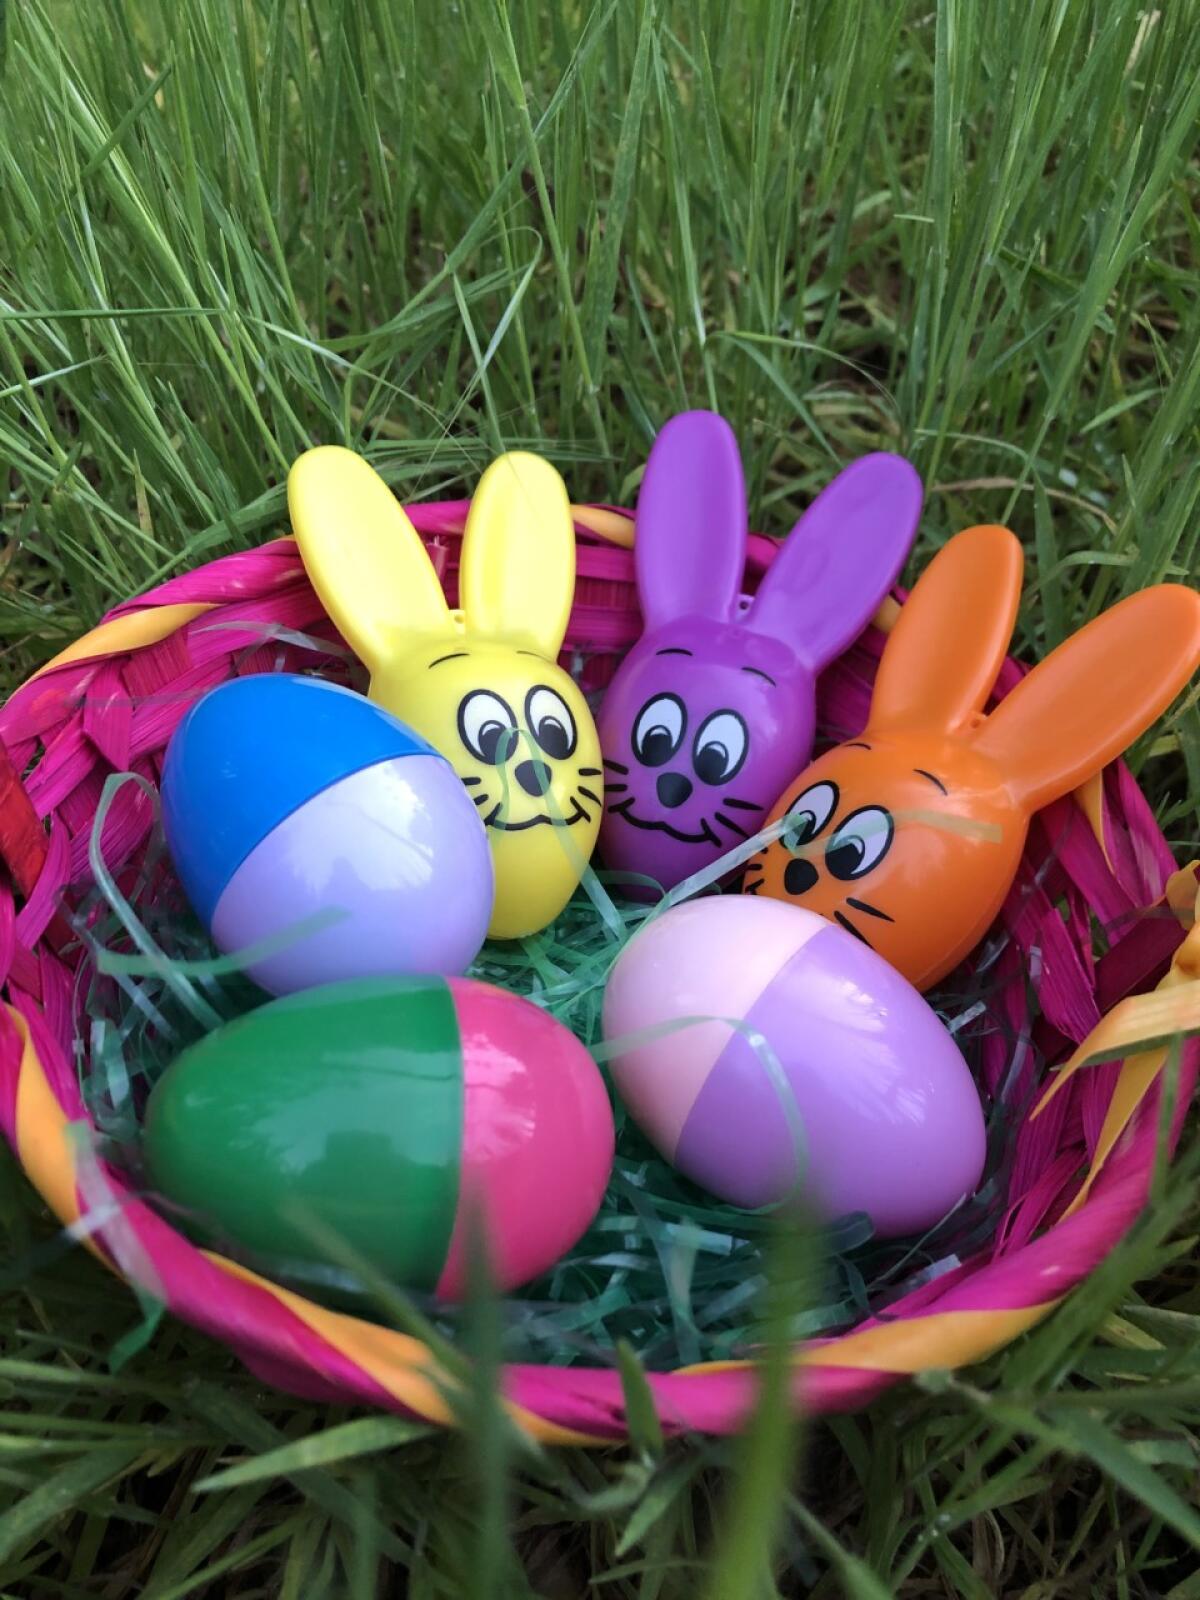 Easter egg hunting is back in person across San Diego County - San Diego  Union-Tribune en Español